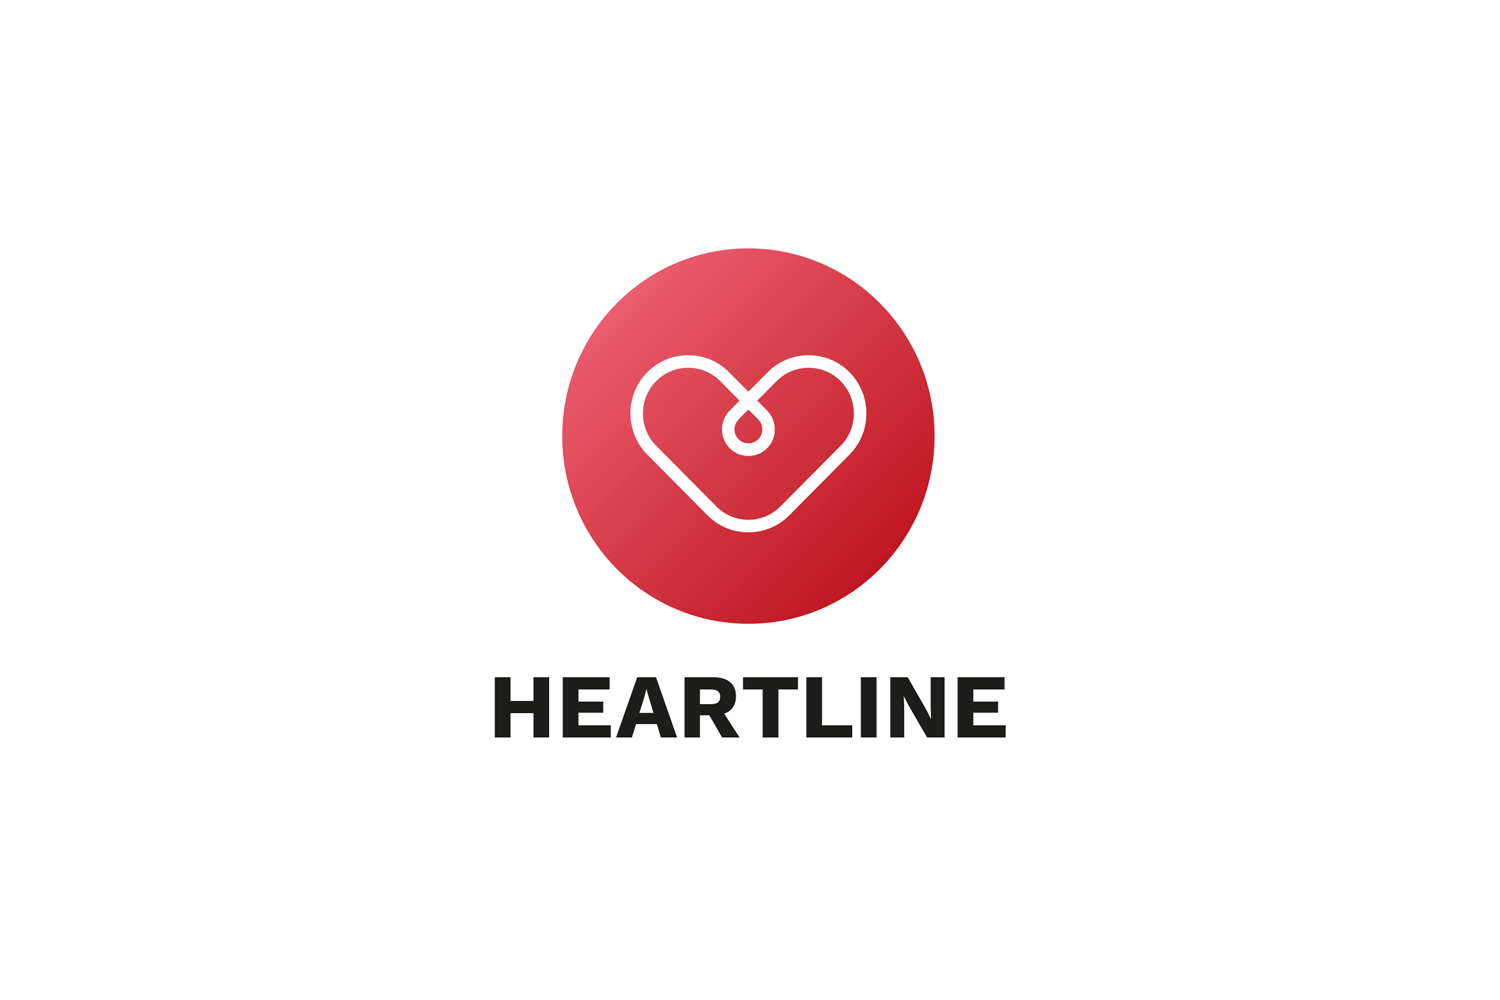 Heartline Logo Template